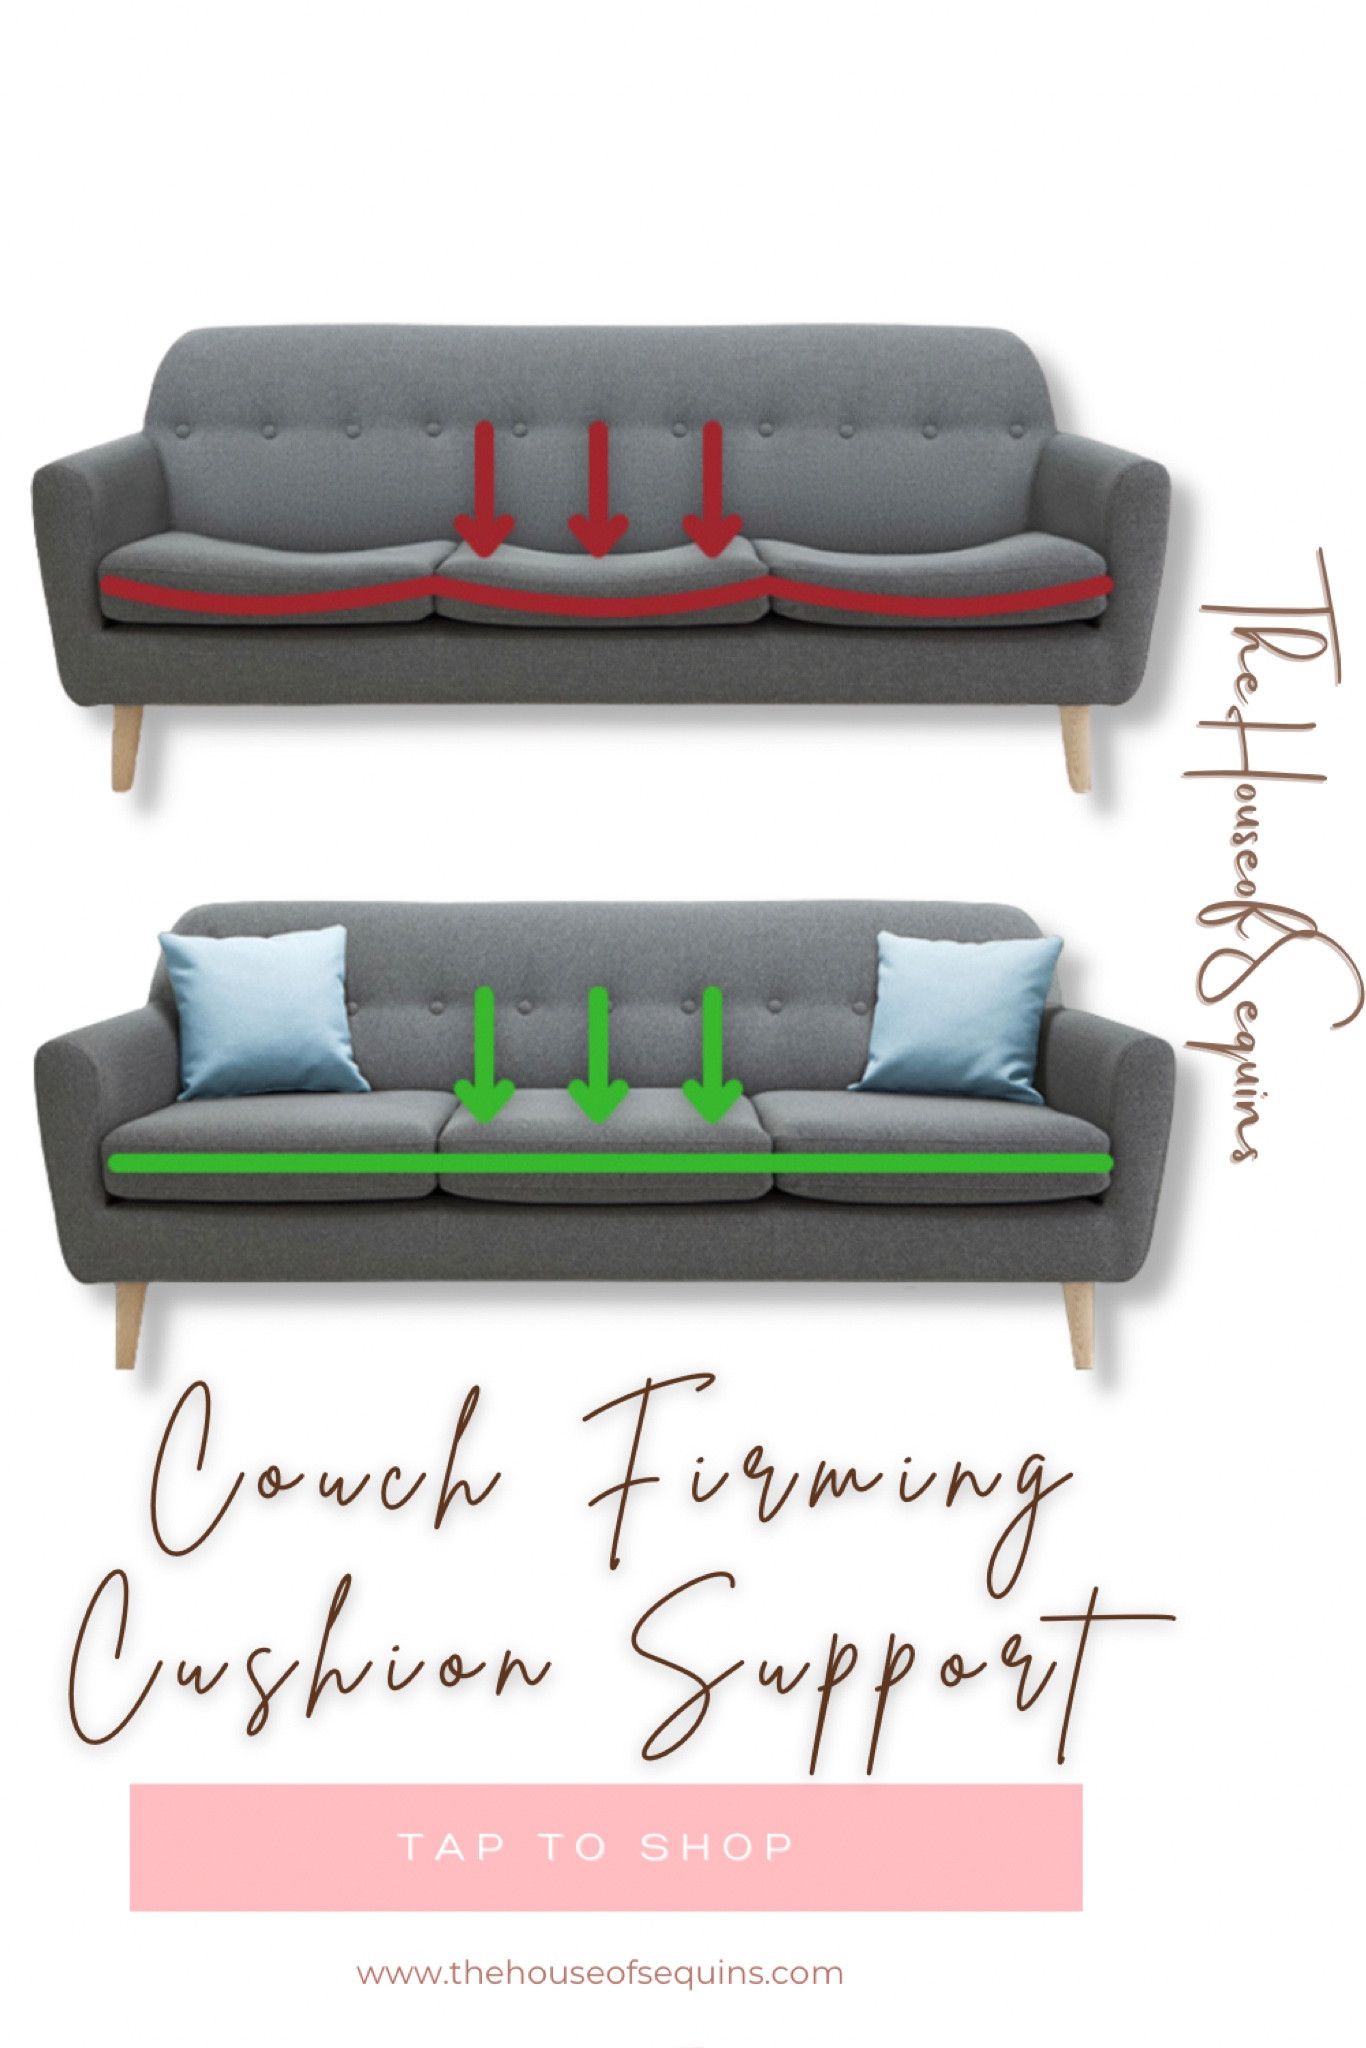  BENSHOME Upgraded Sofa Cushion Support 19.7x58-67